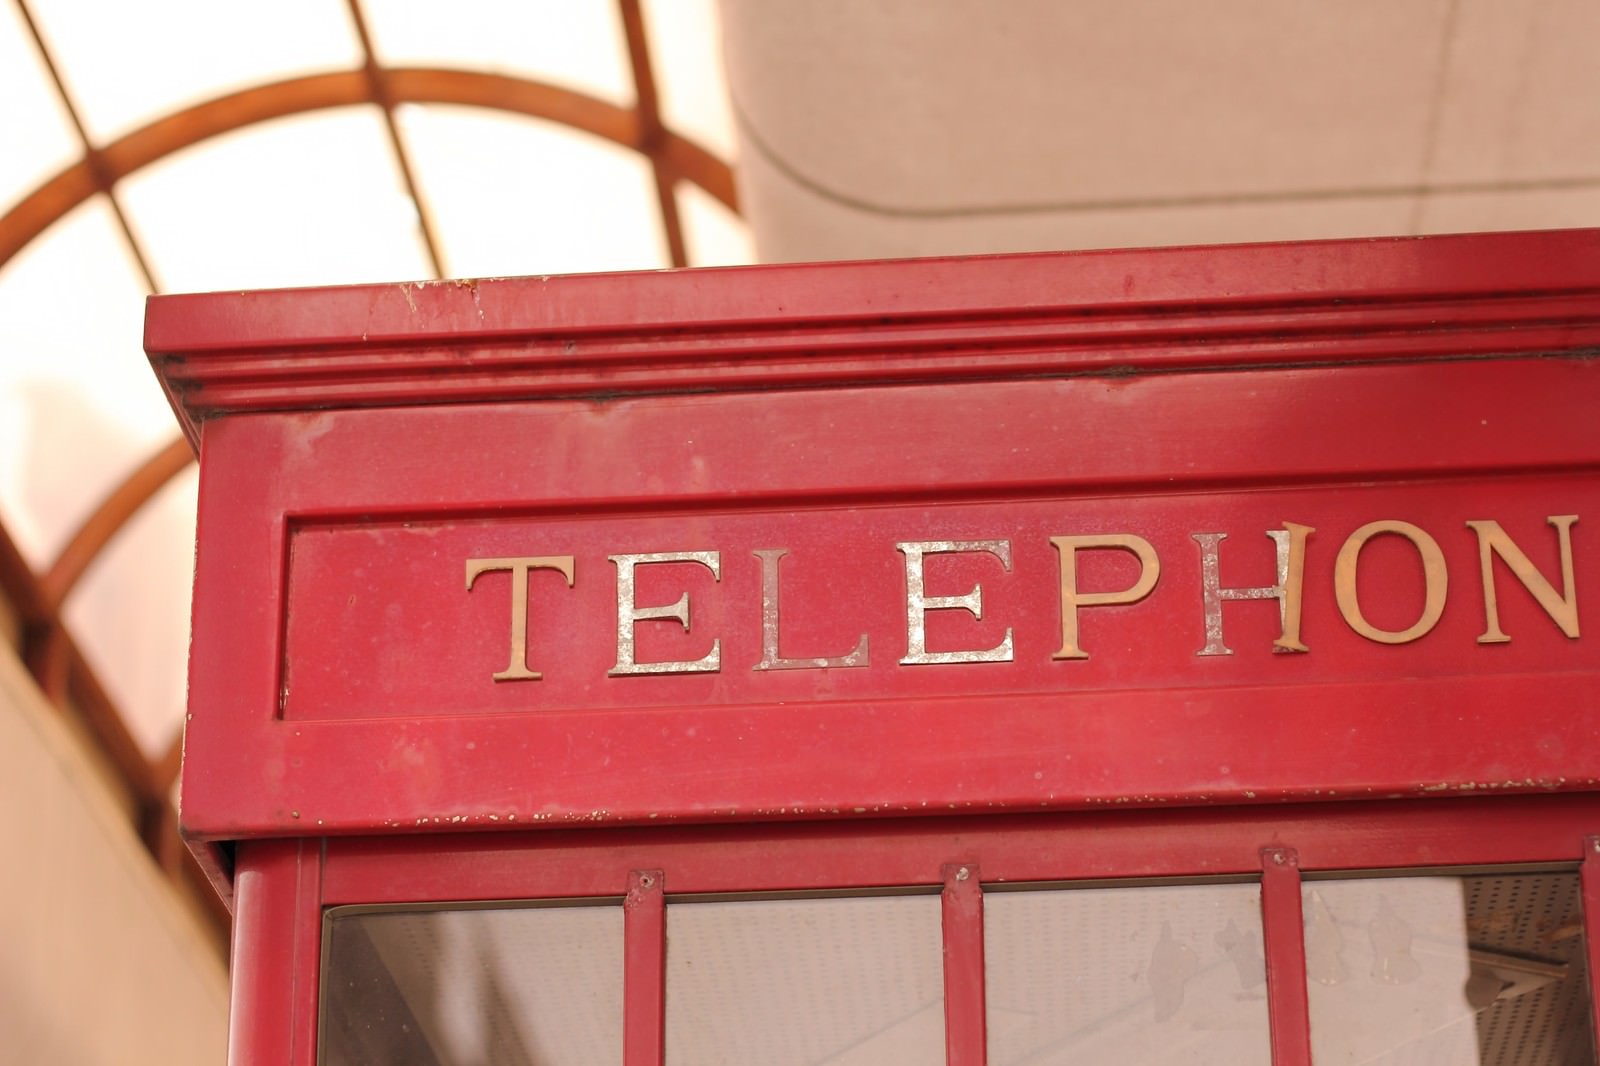 「「TELEPHONE」と書かれた電話ボックス」